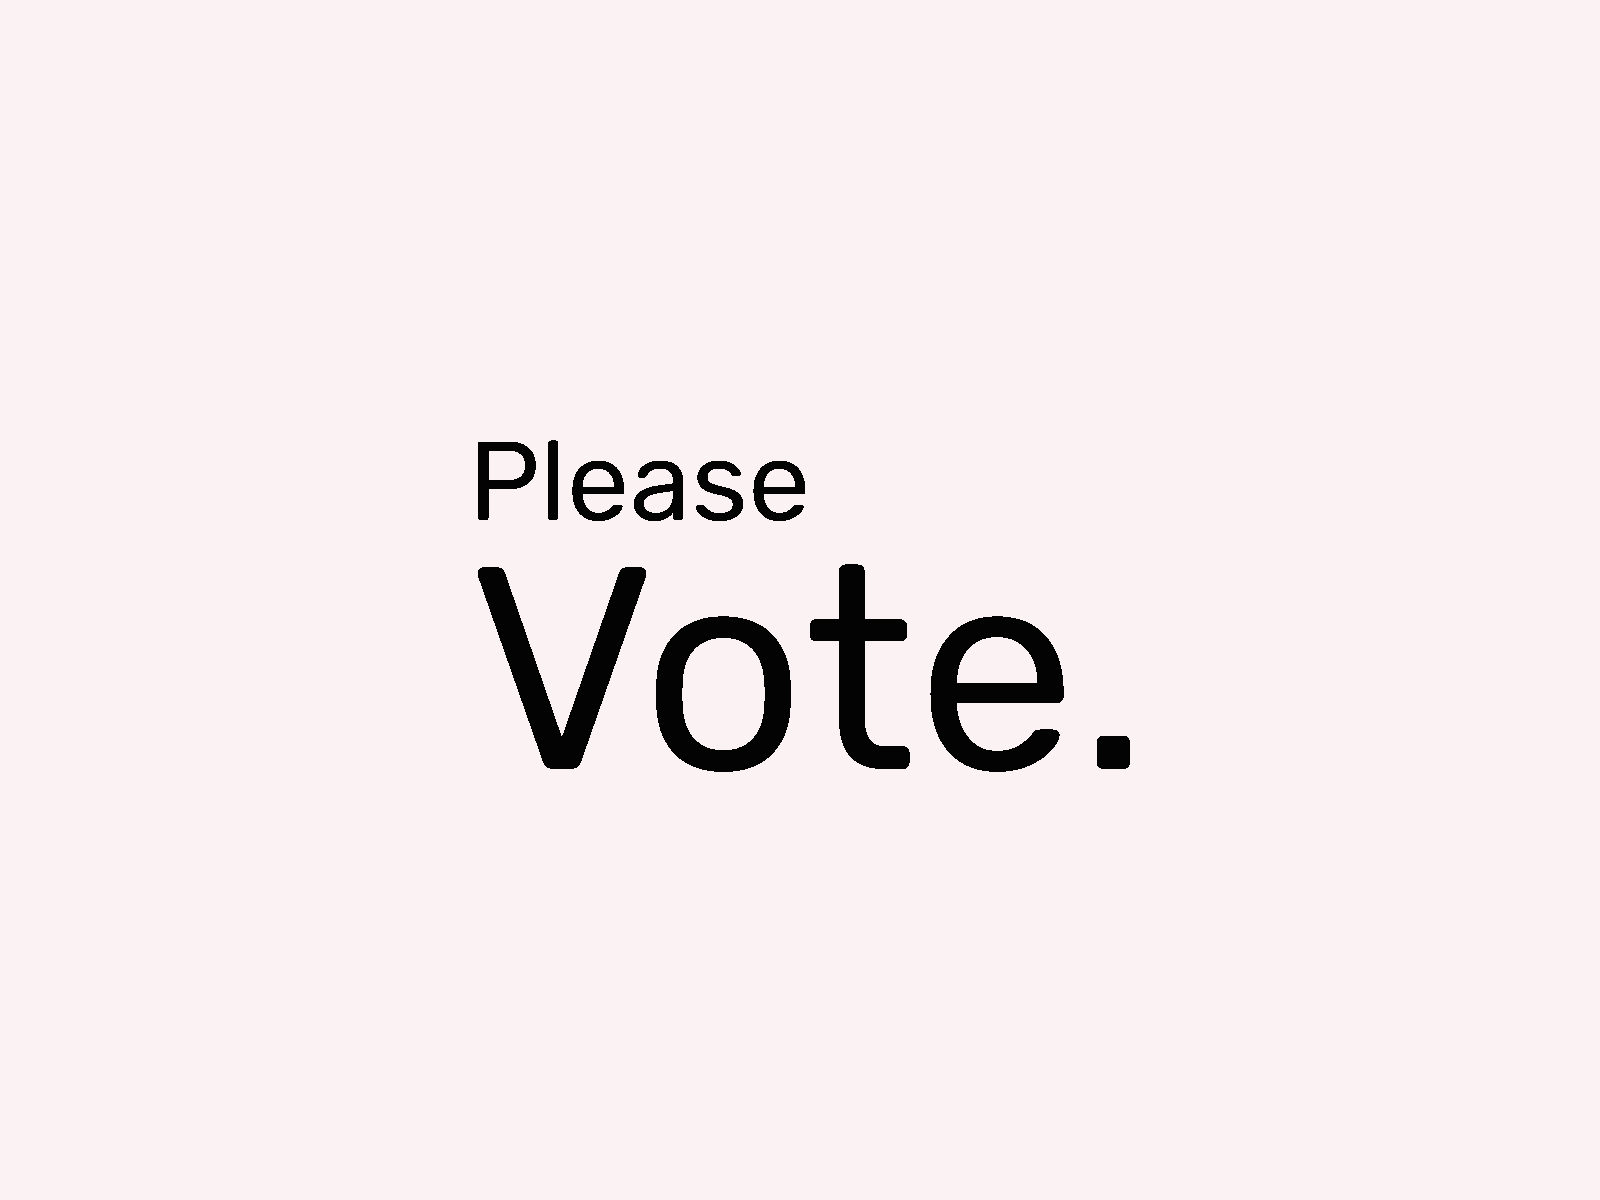 Please vote - Election 2020 by Akash Wadhwani on Dribbble